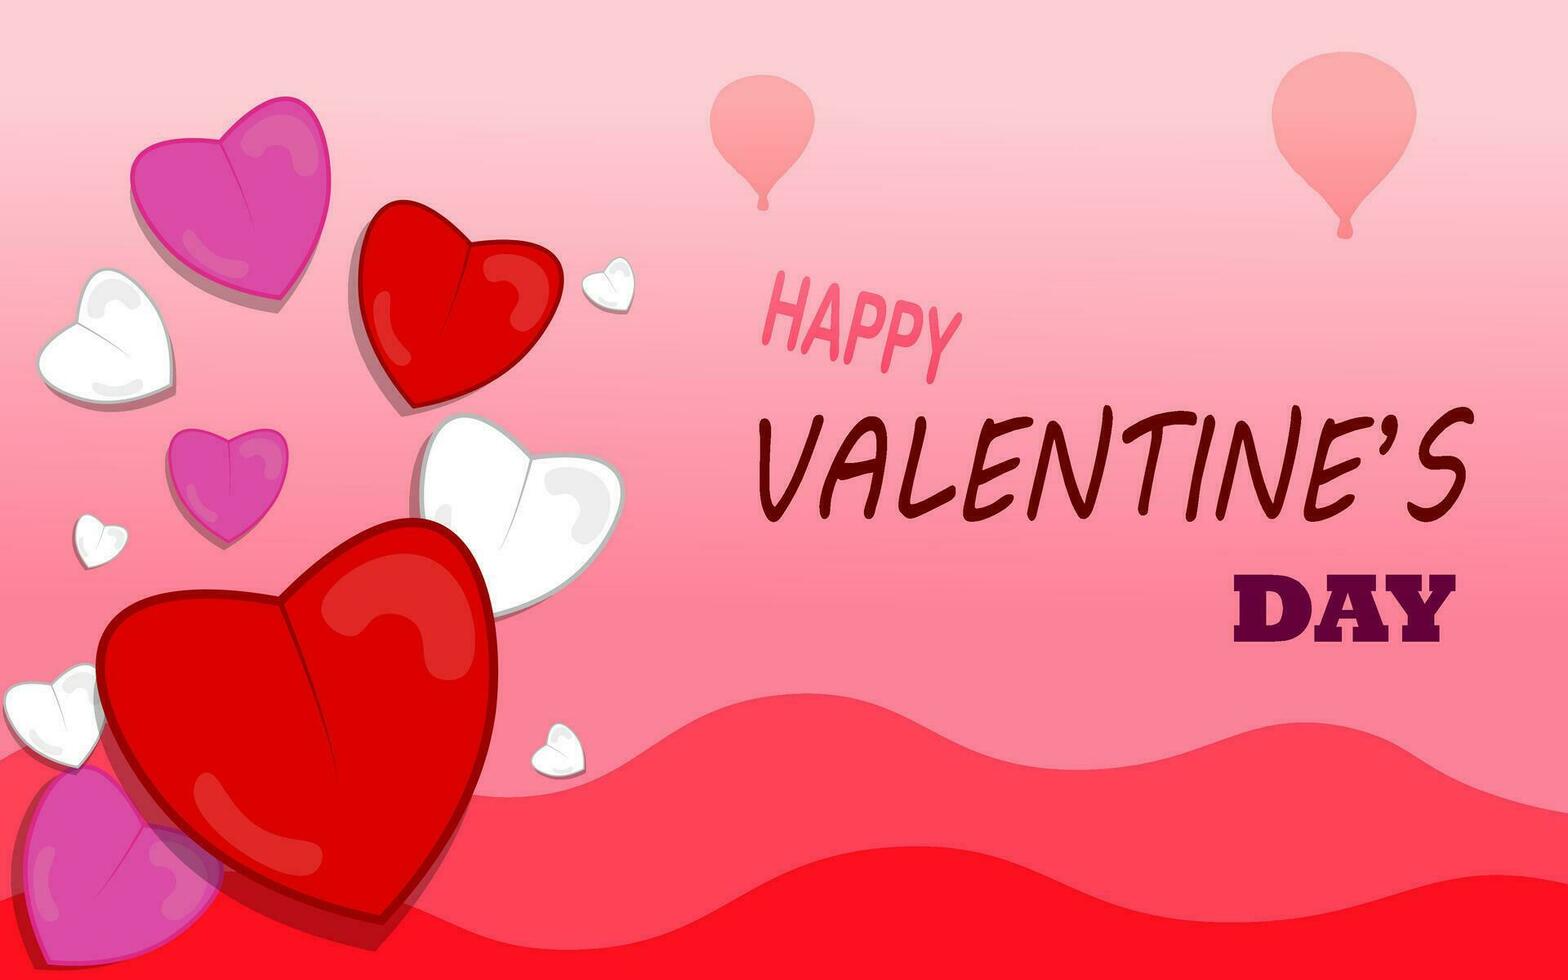 illustration design about love and affection. valentine design for greeting card, banner, flyer, wallpaper, cover. vector